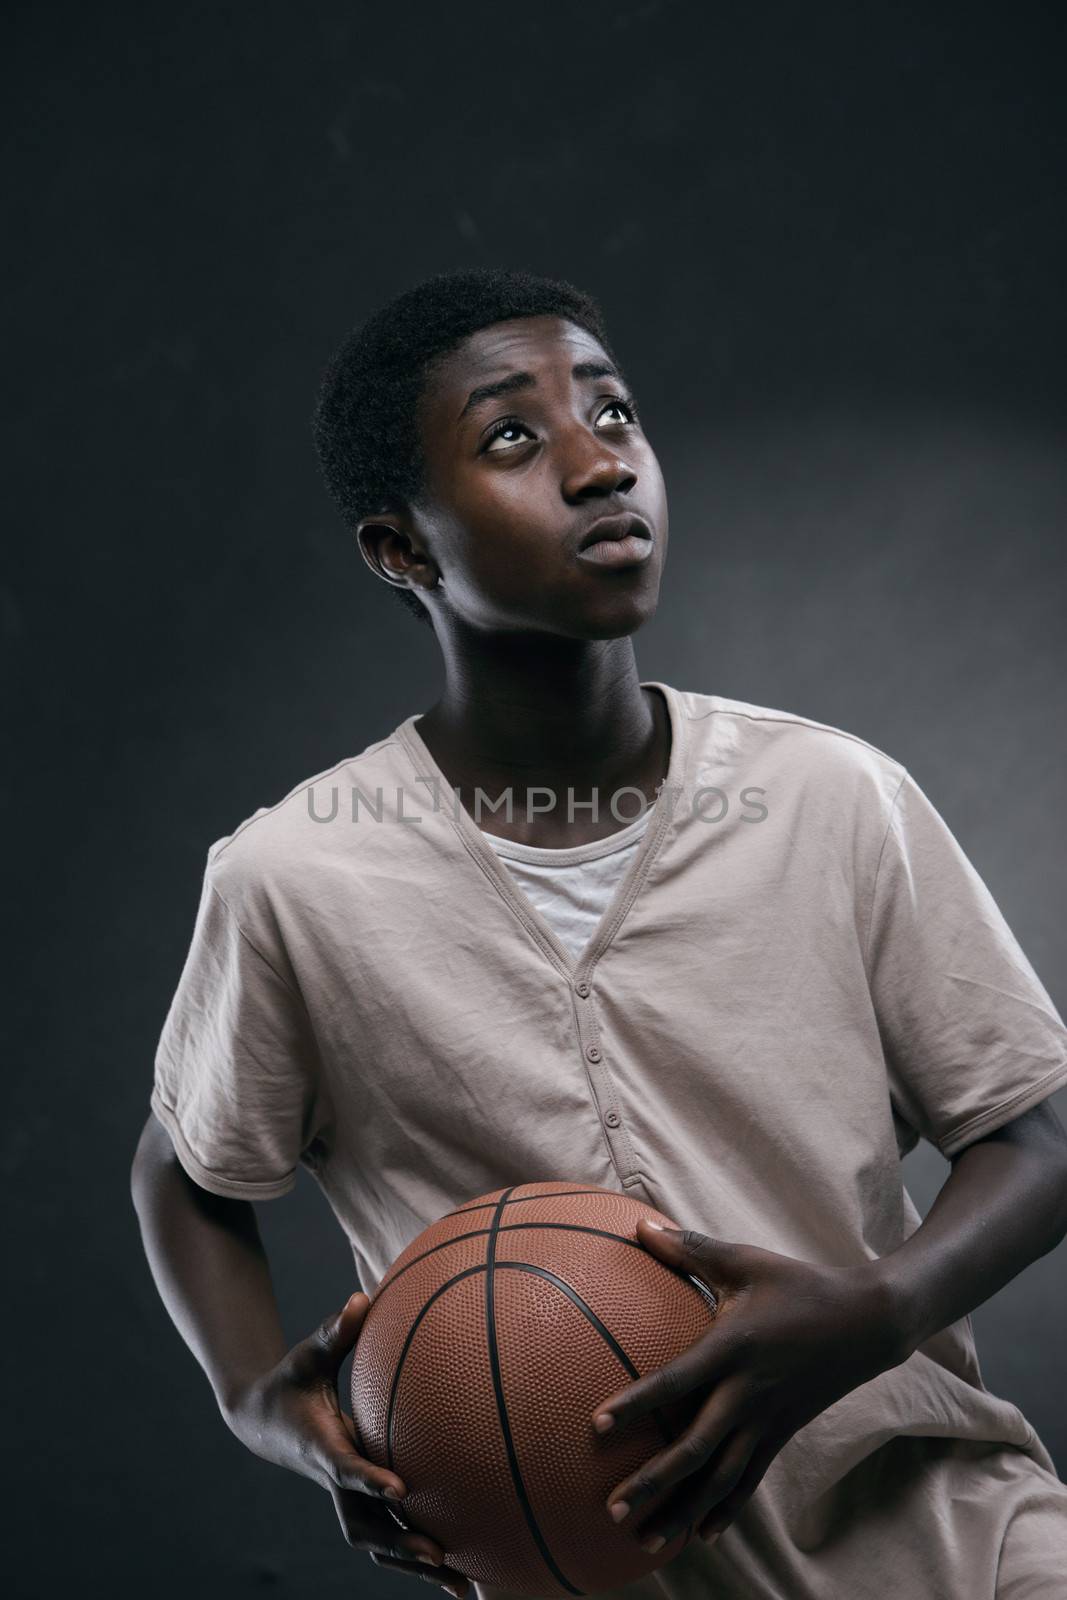 An African boy playing basketball on dark background